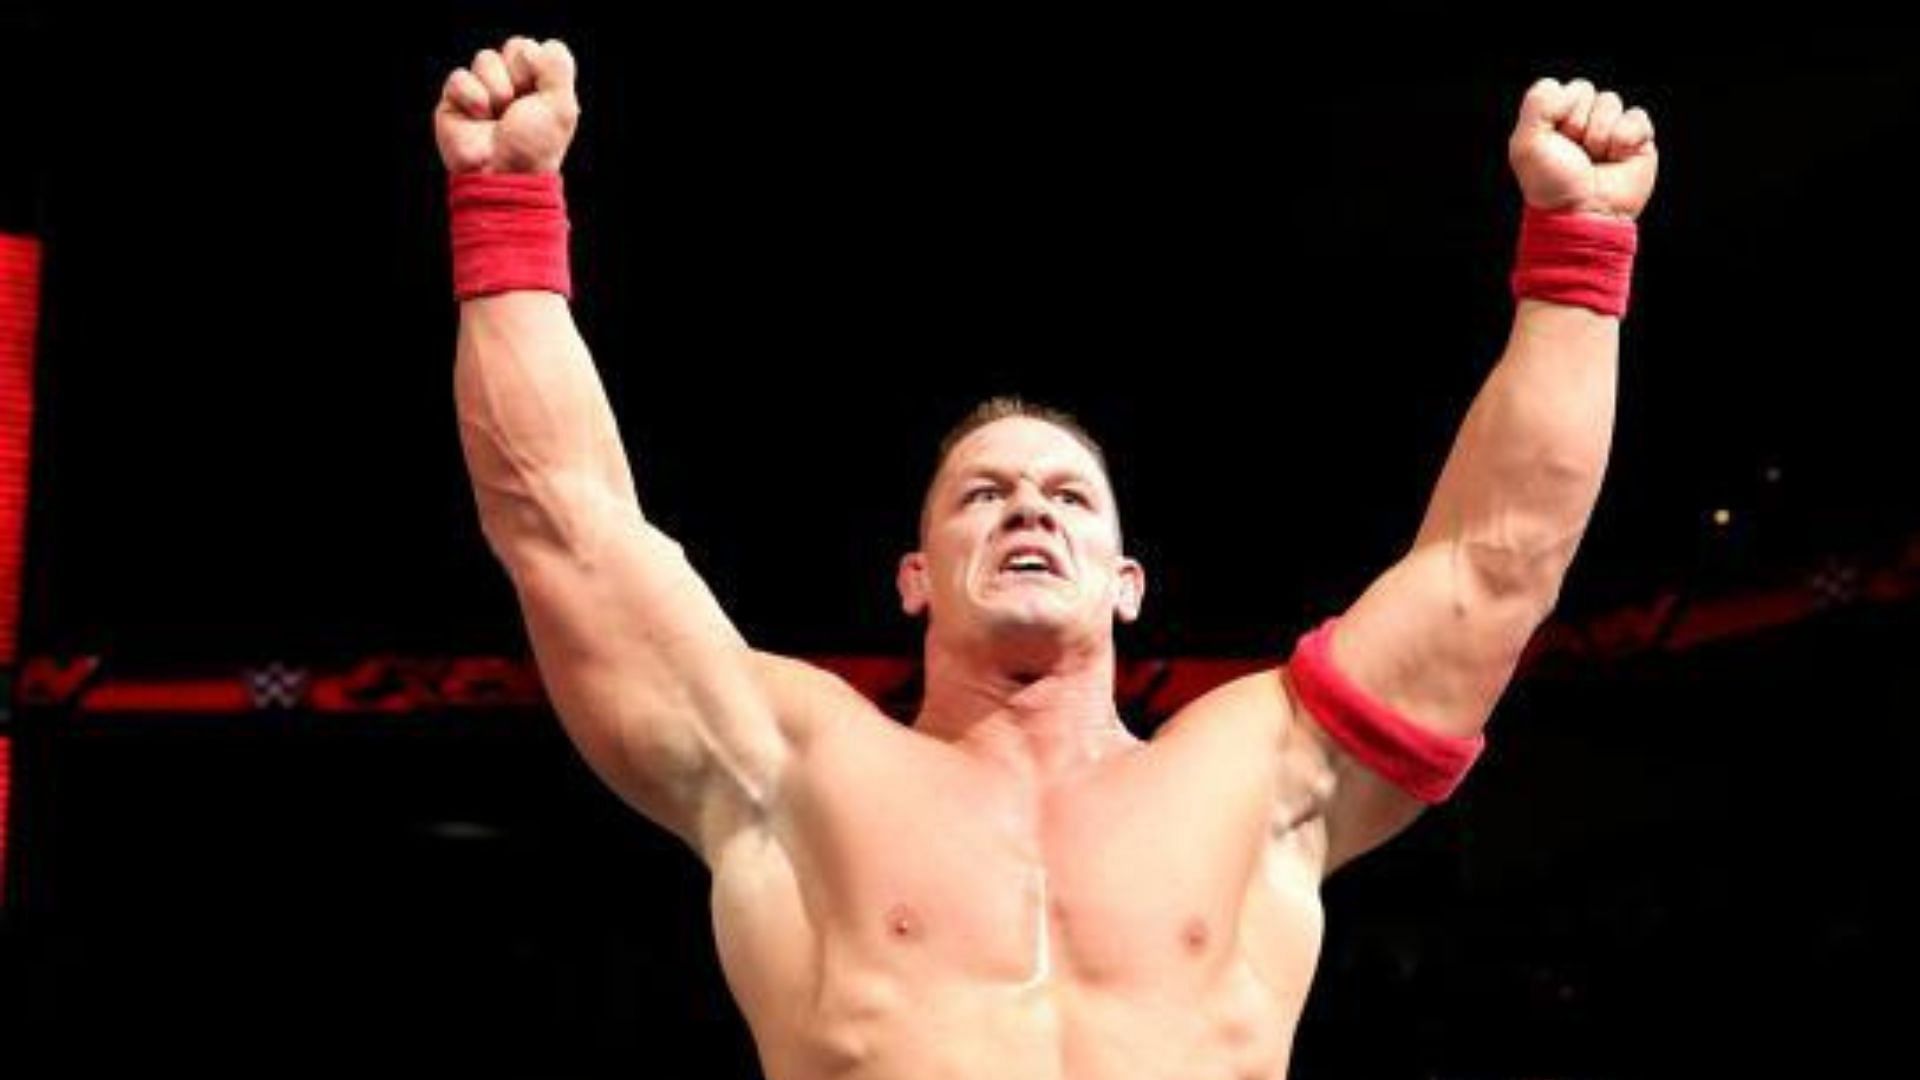 John Cena is one WWE